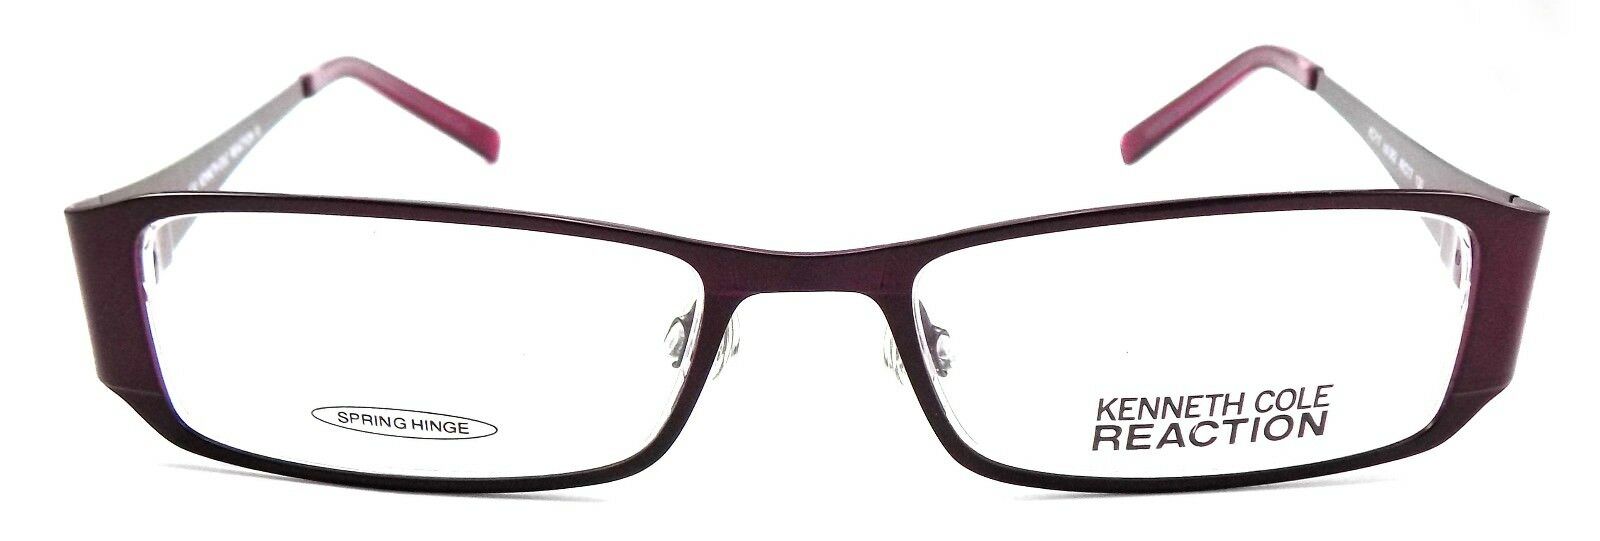 2-Kenneth Cole REACTION KC0717 082 Women's Eyeglasses Petite 49-17-130 Violet-726773164588-IKSpecs